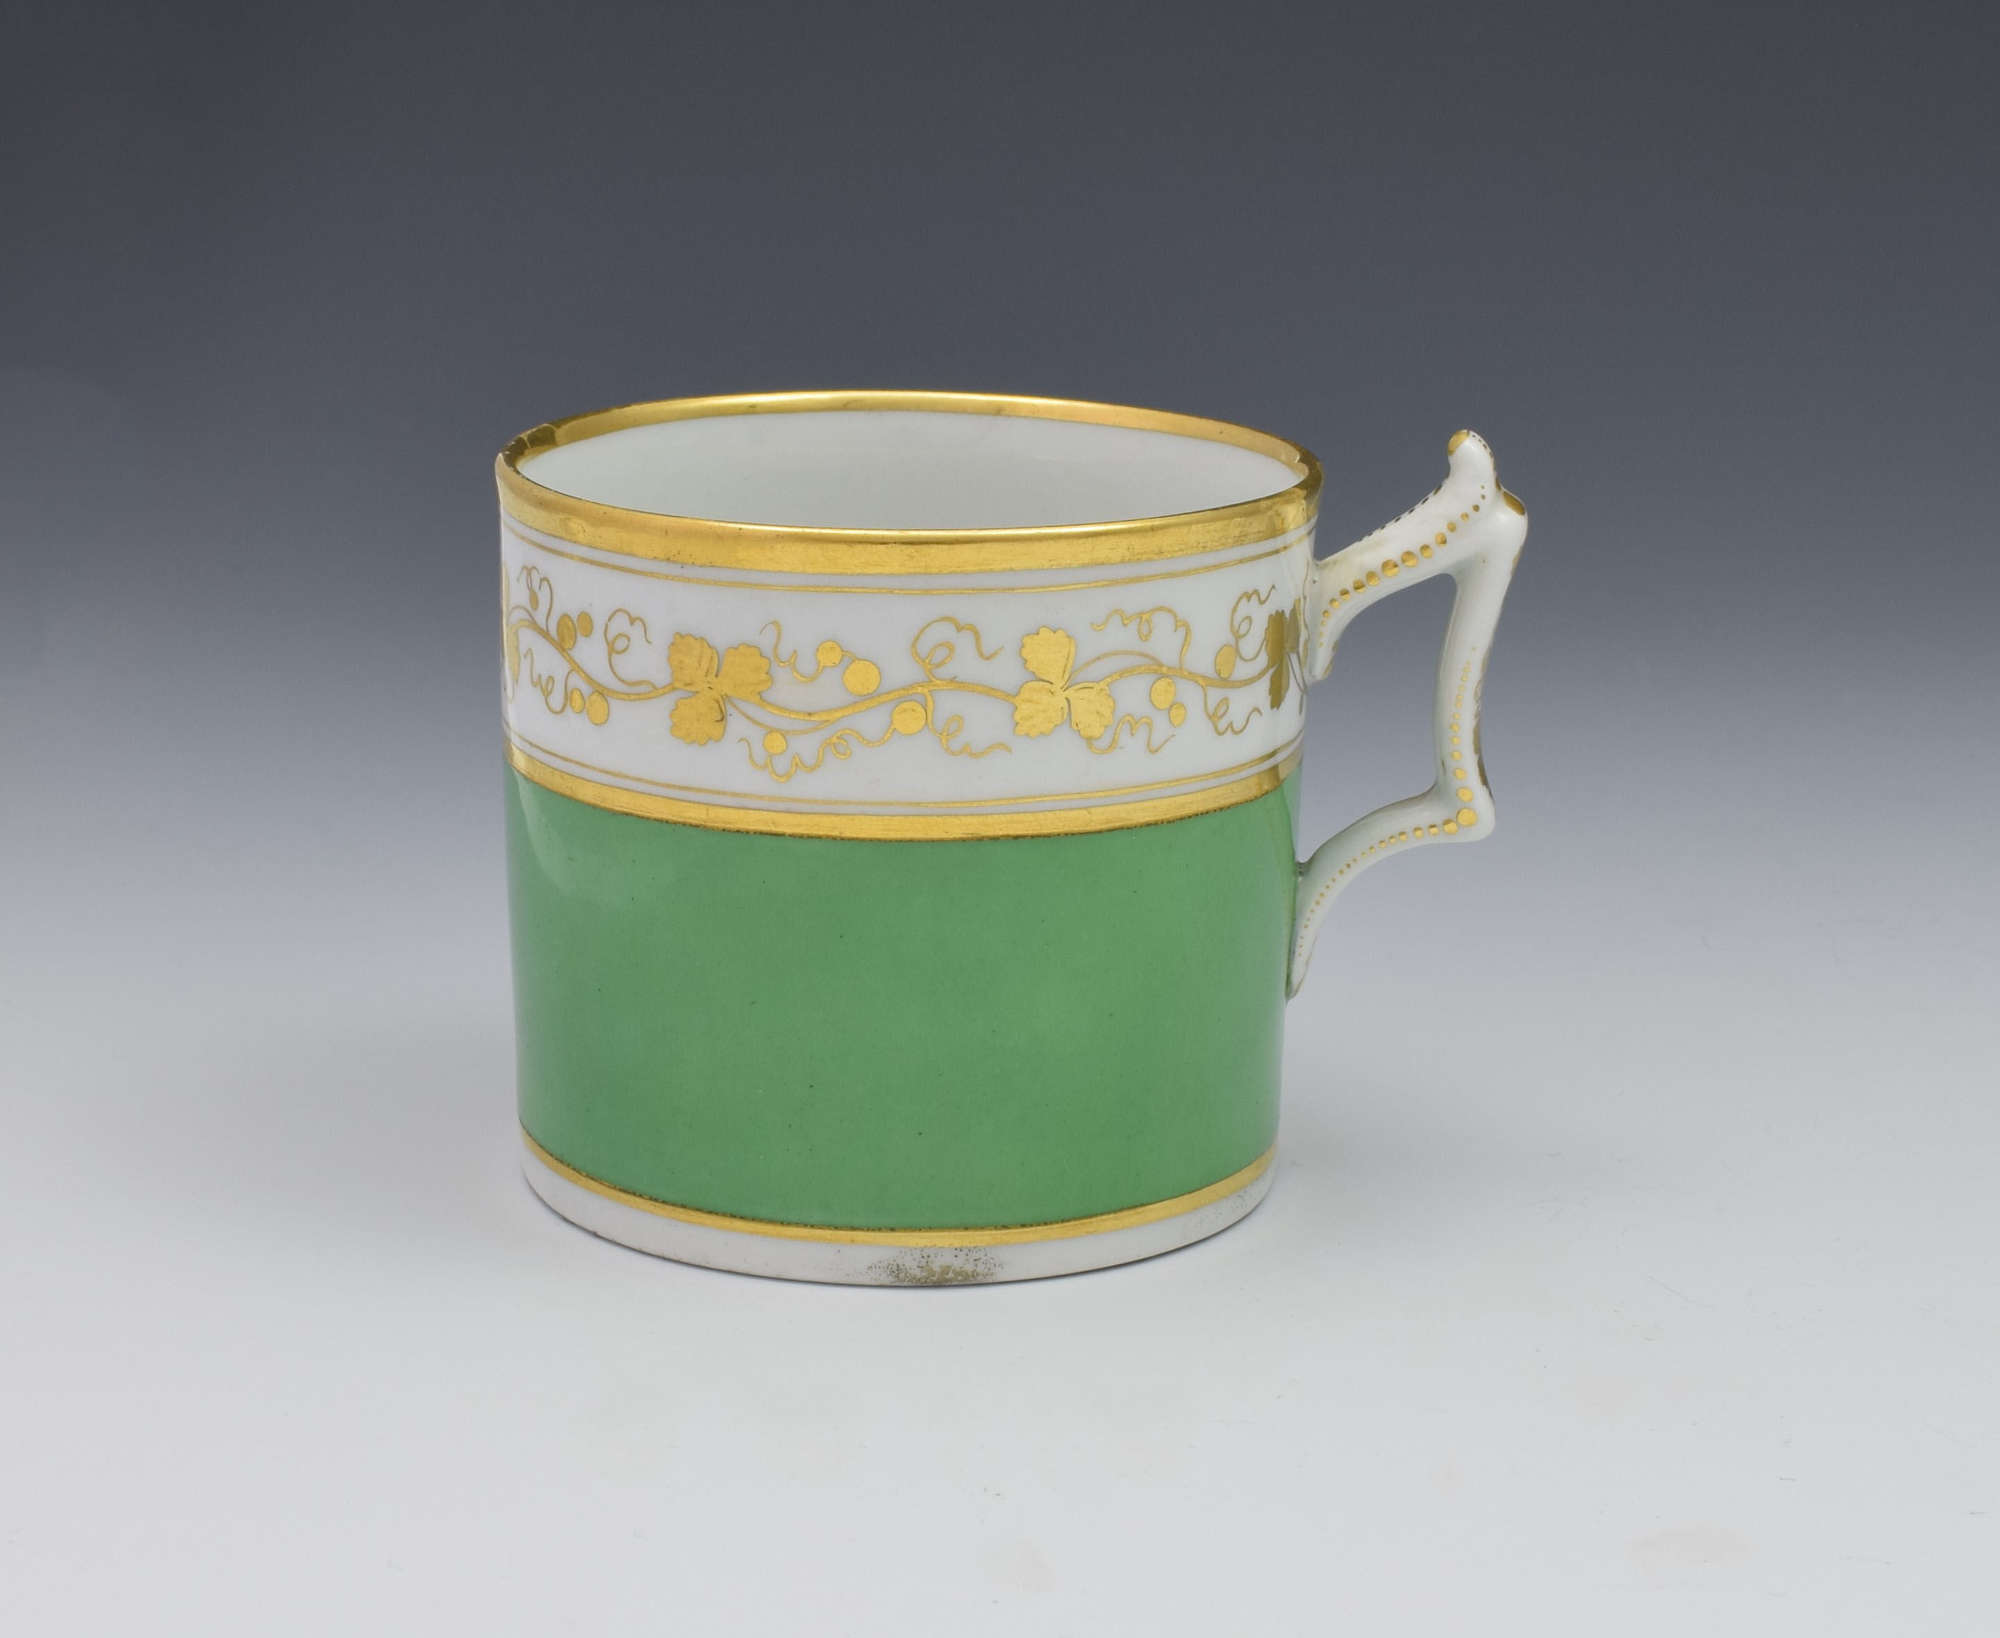 Flight Barr & Barr Worcester Porcelain Coffee Can c.1820